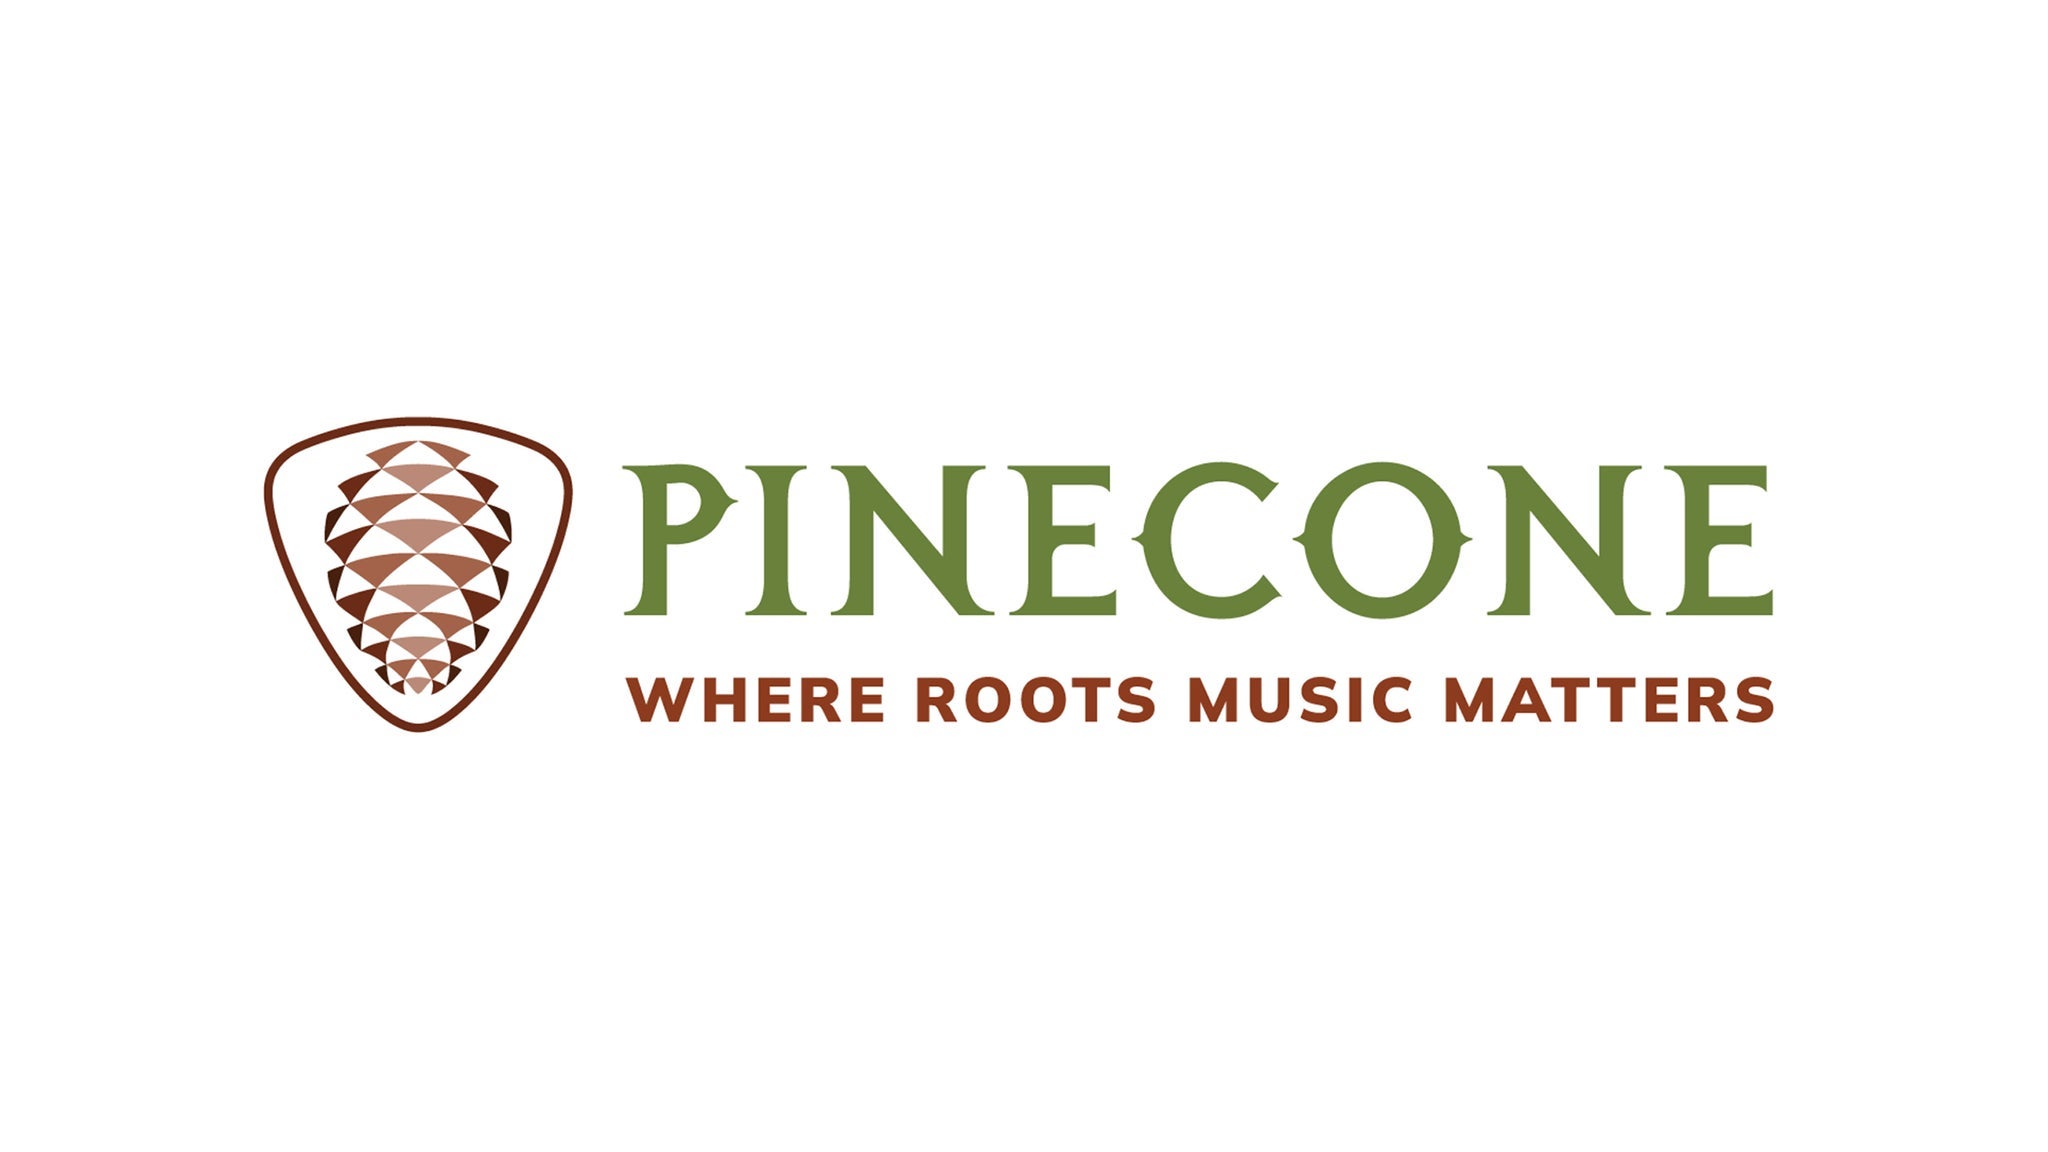 Pinecone present: The North Carolina Heritage Awards presale password